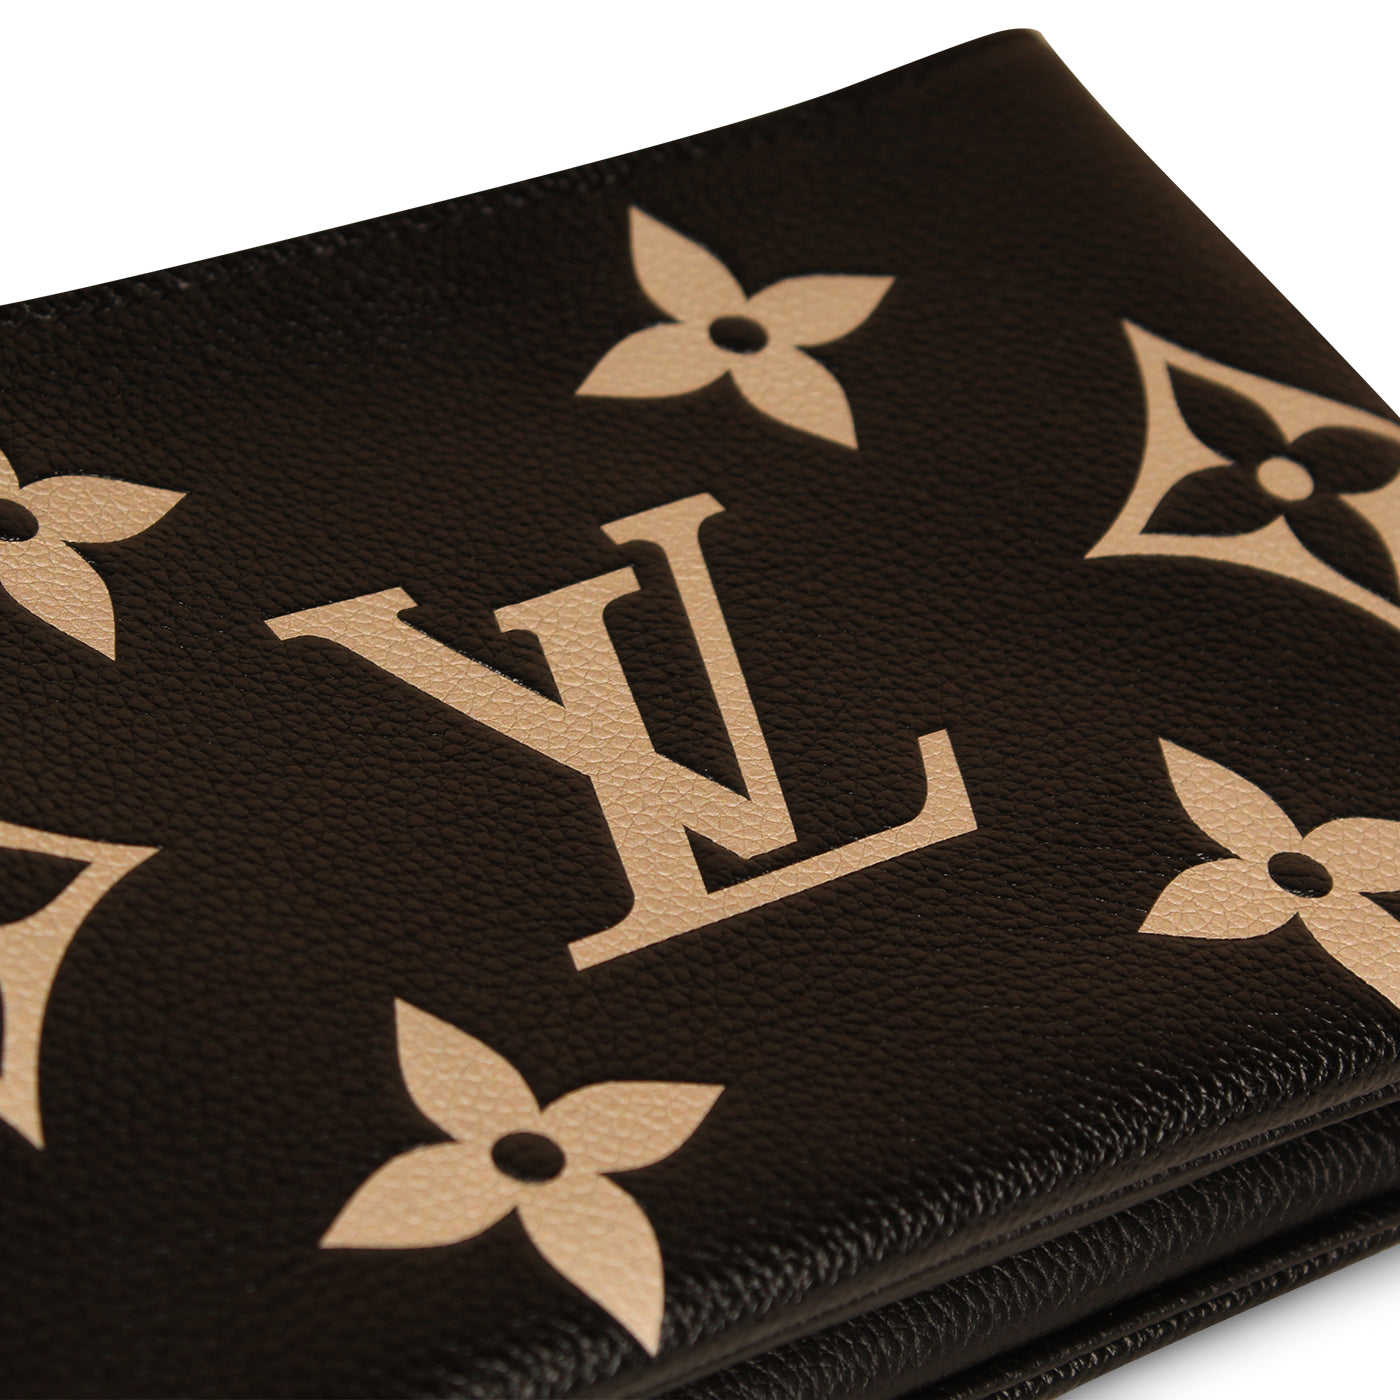 Louis Vuitton - Pochette Double Zip on Strap - Black/Cream